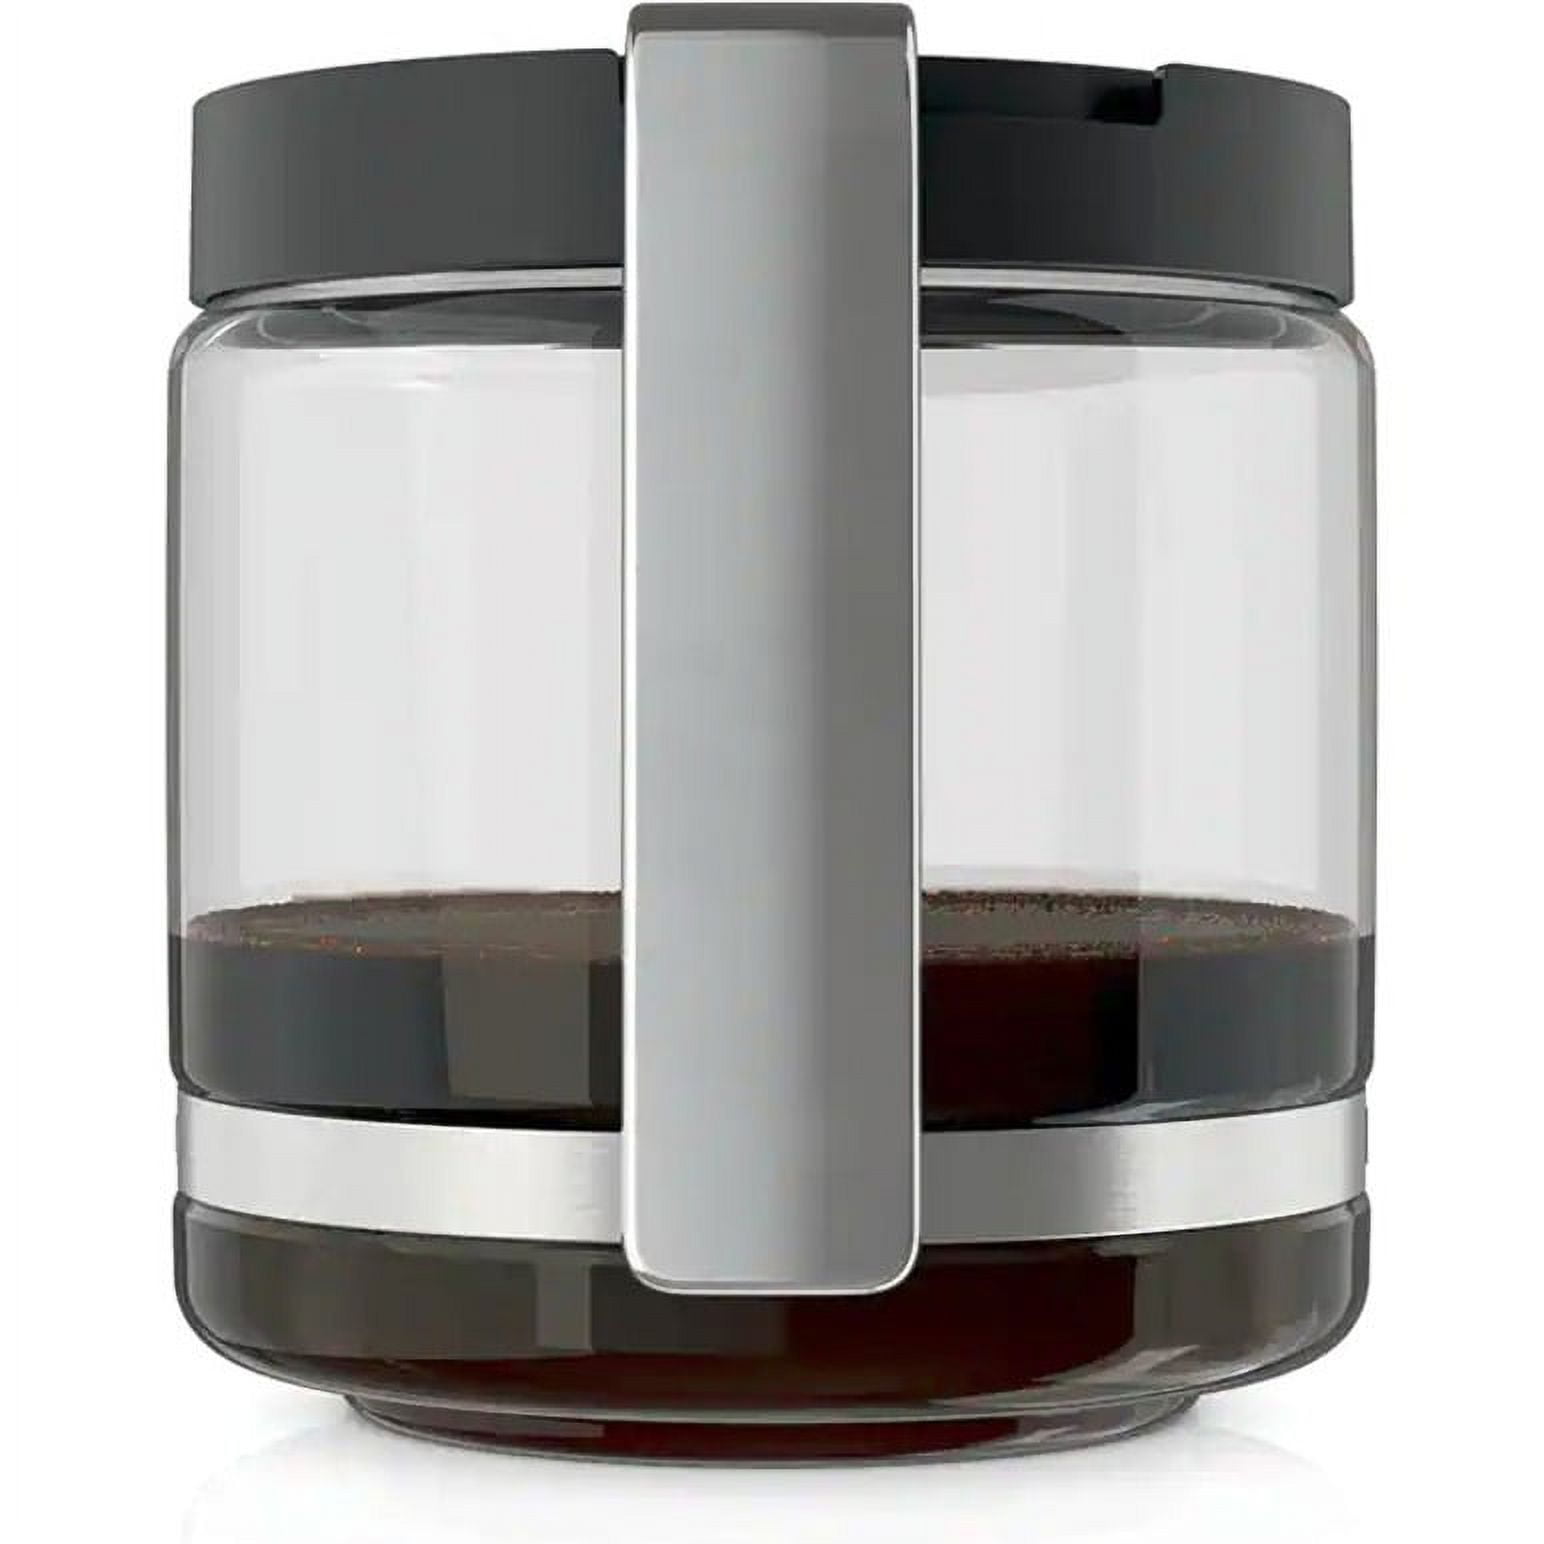 Ninja Programmable XL 14-Cup Coffee Maker PRO DCM201